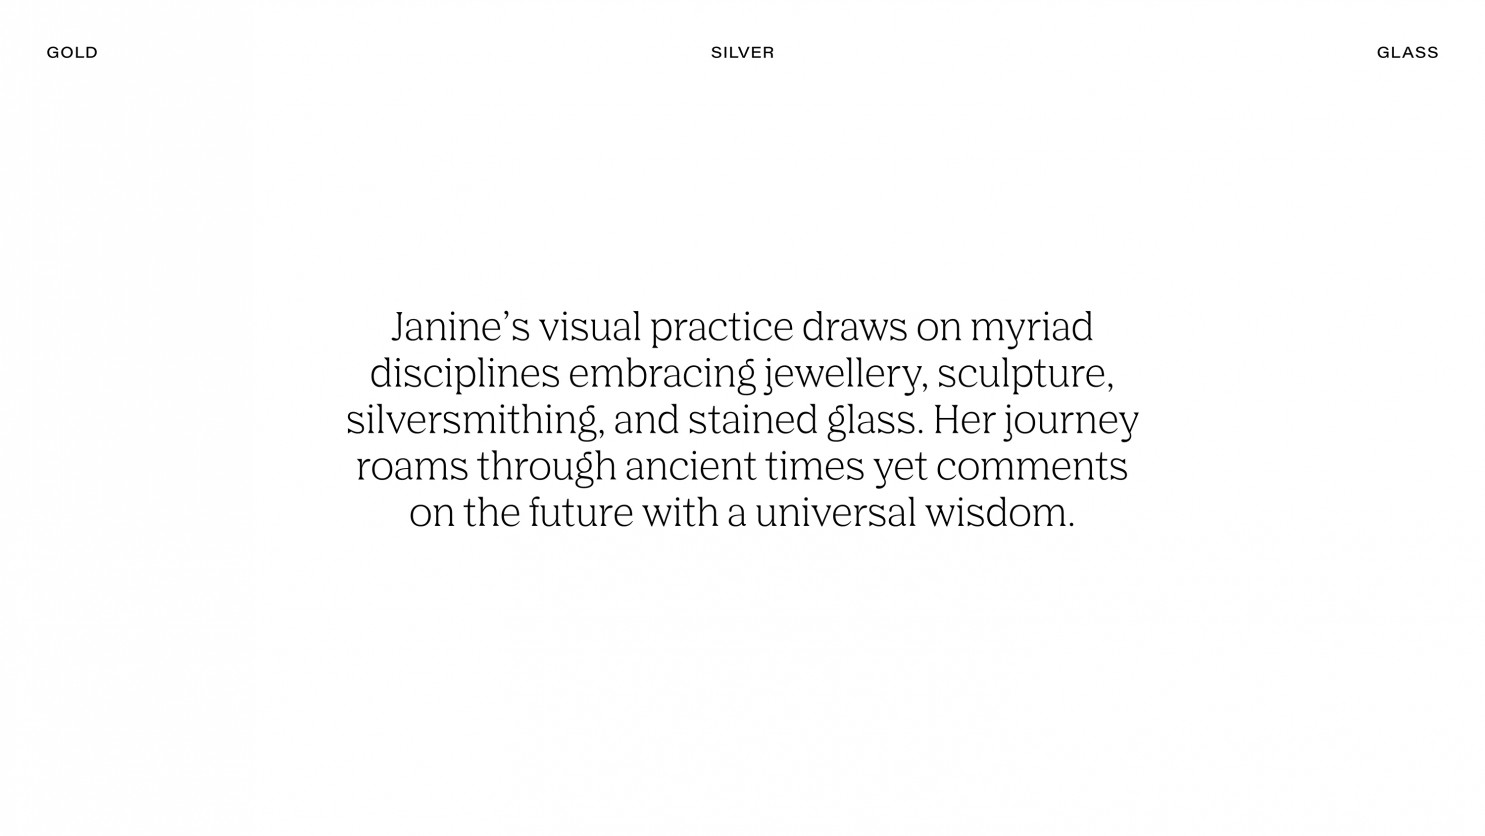 Janine Tanzer – Portfolio